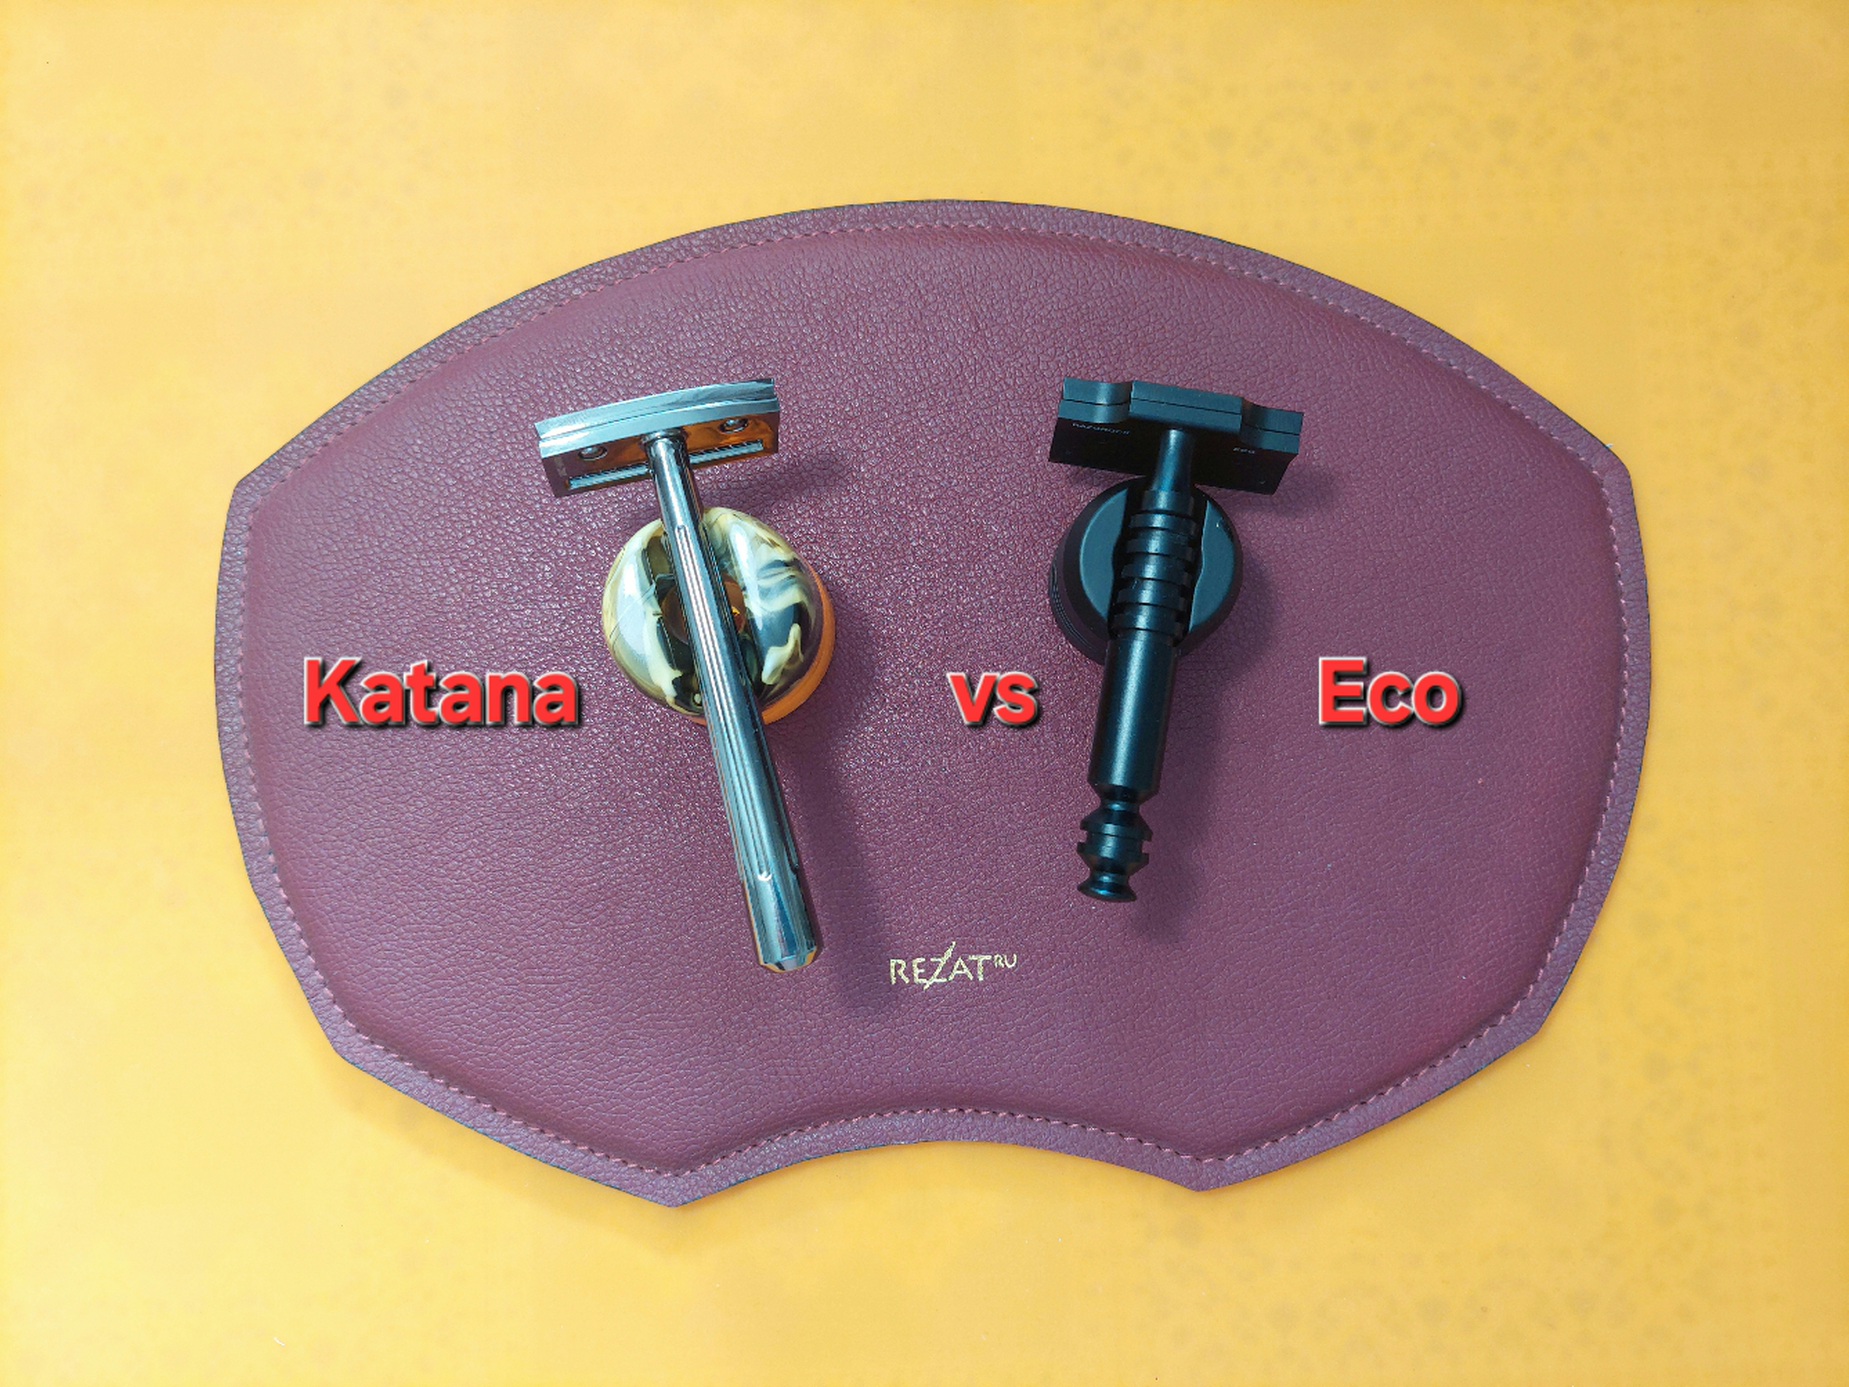 Razorock Eco vs Katana